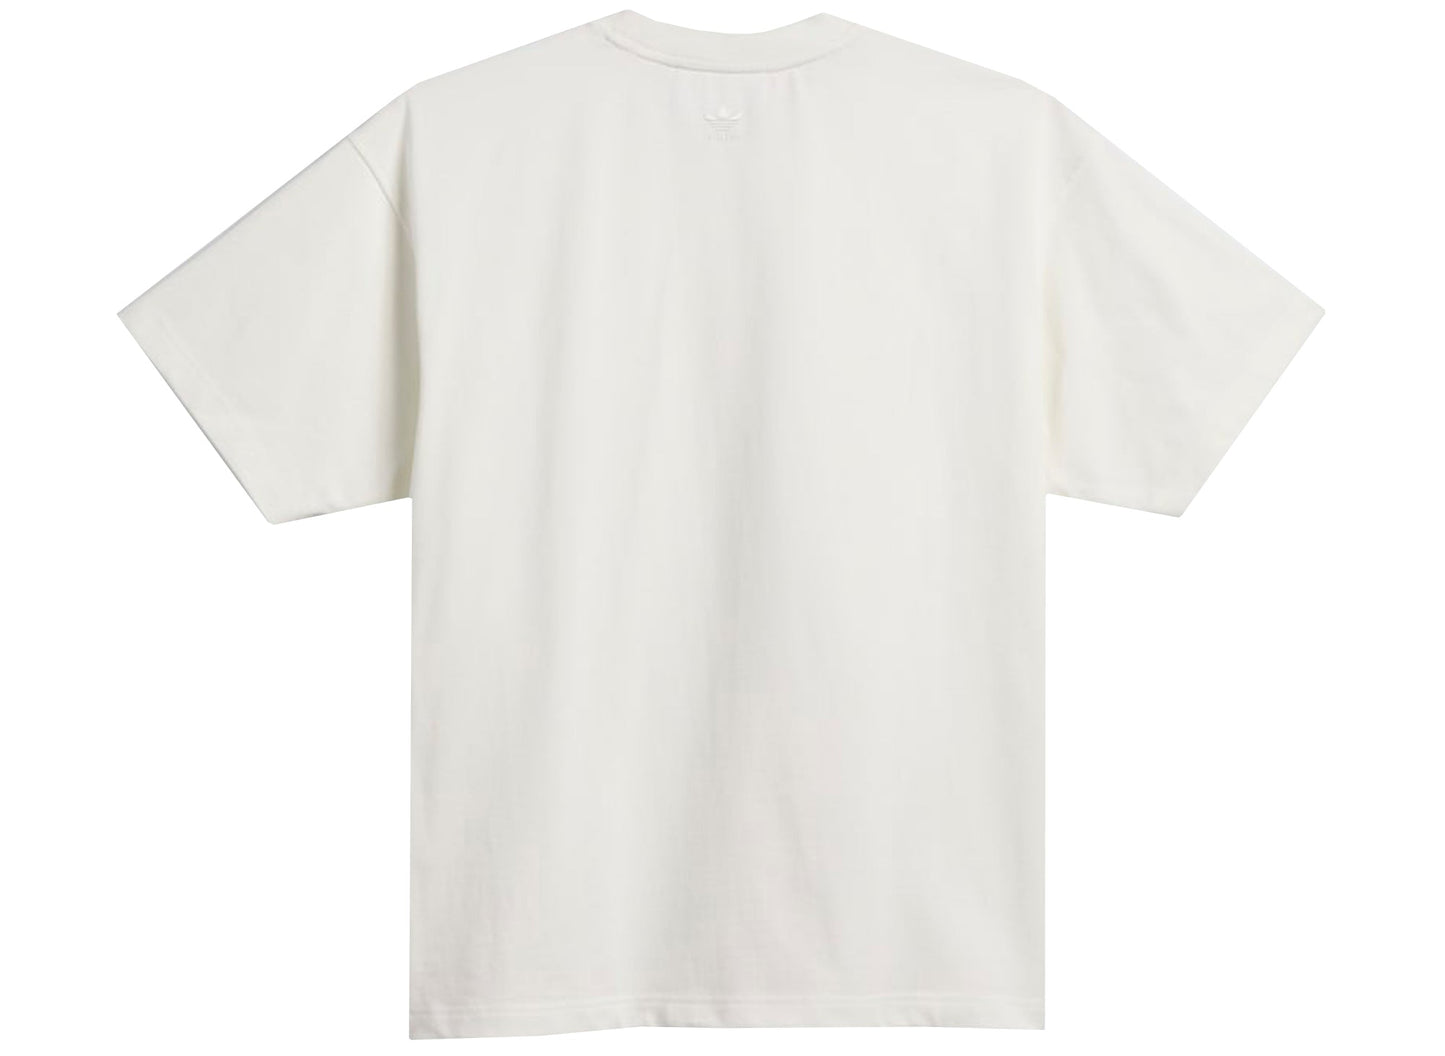 Adidas Pharrell Williams Basics Shirt in Off White